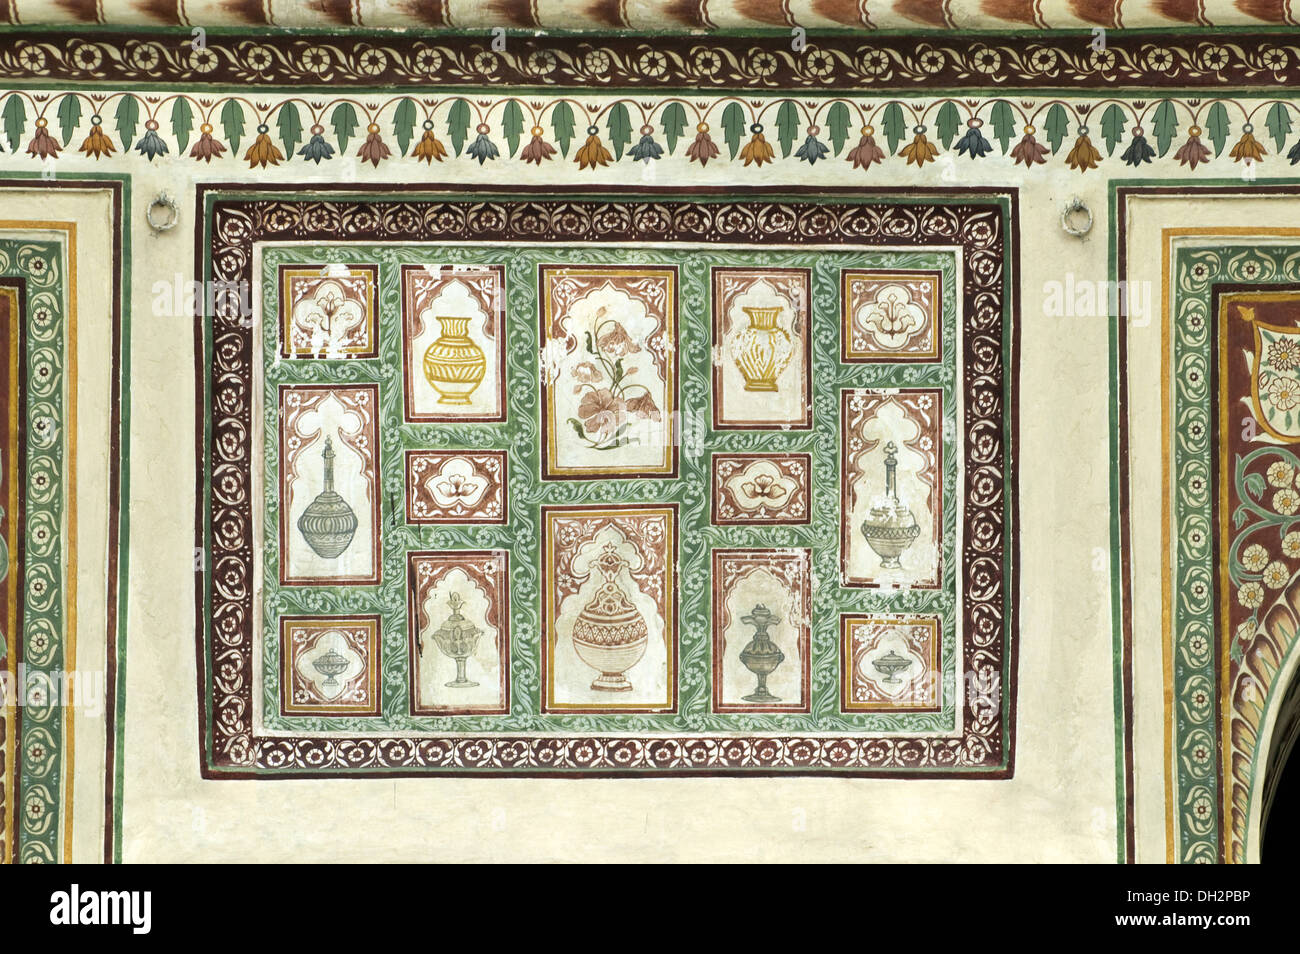 Pitture Murali su Mansa Devi Tempio Panchkula haryana India Foto Stock